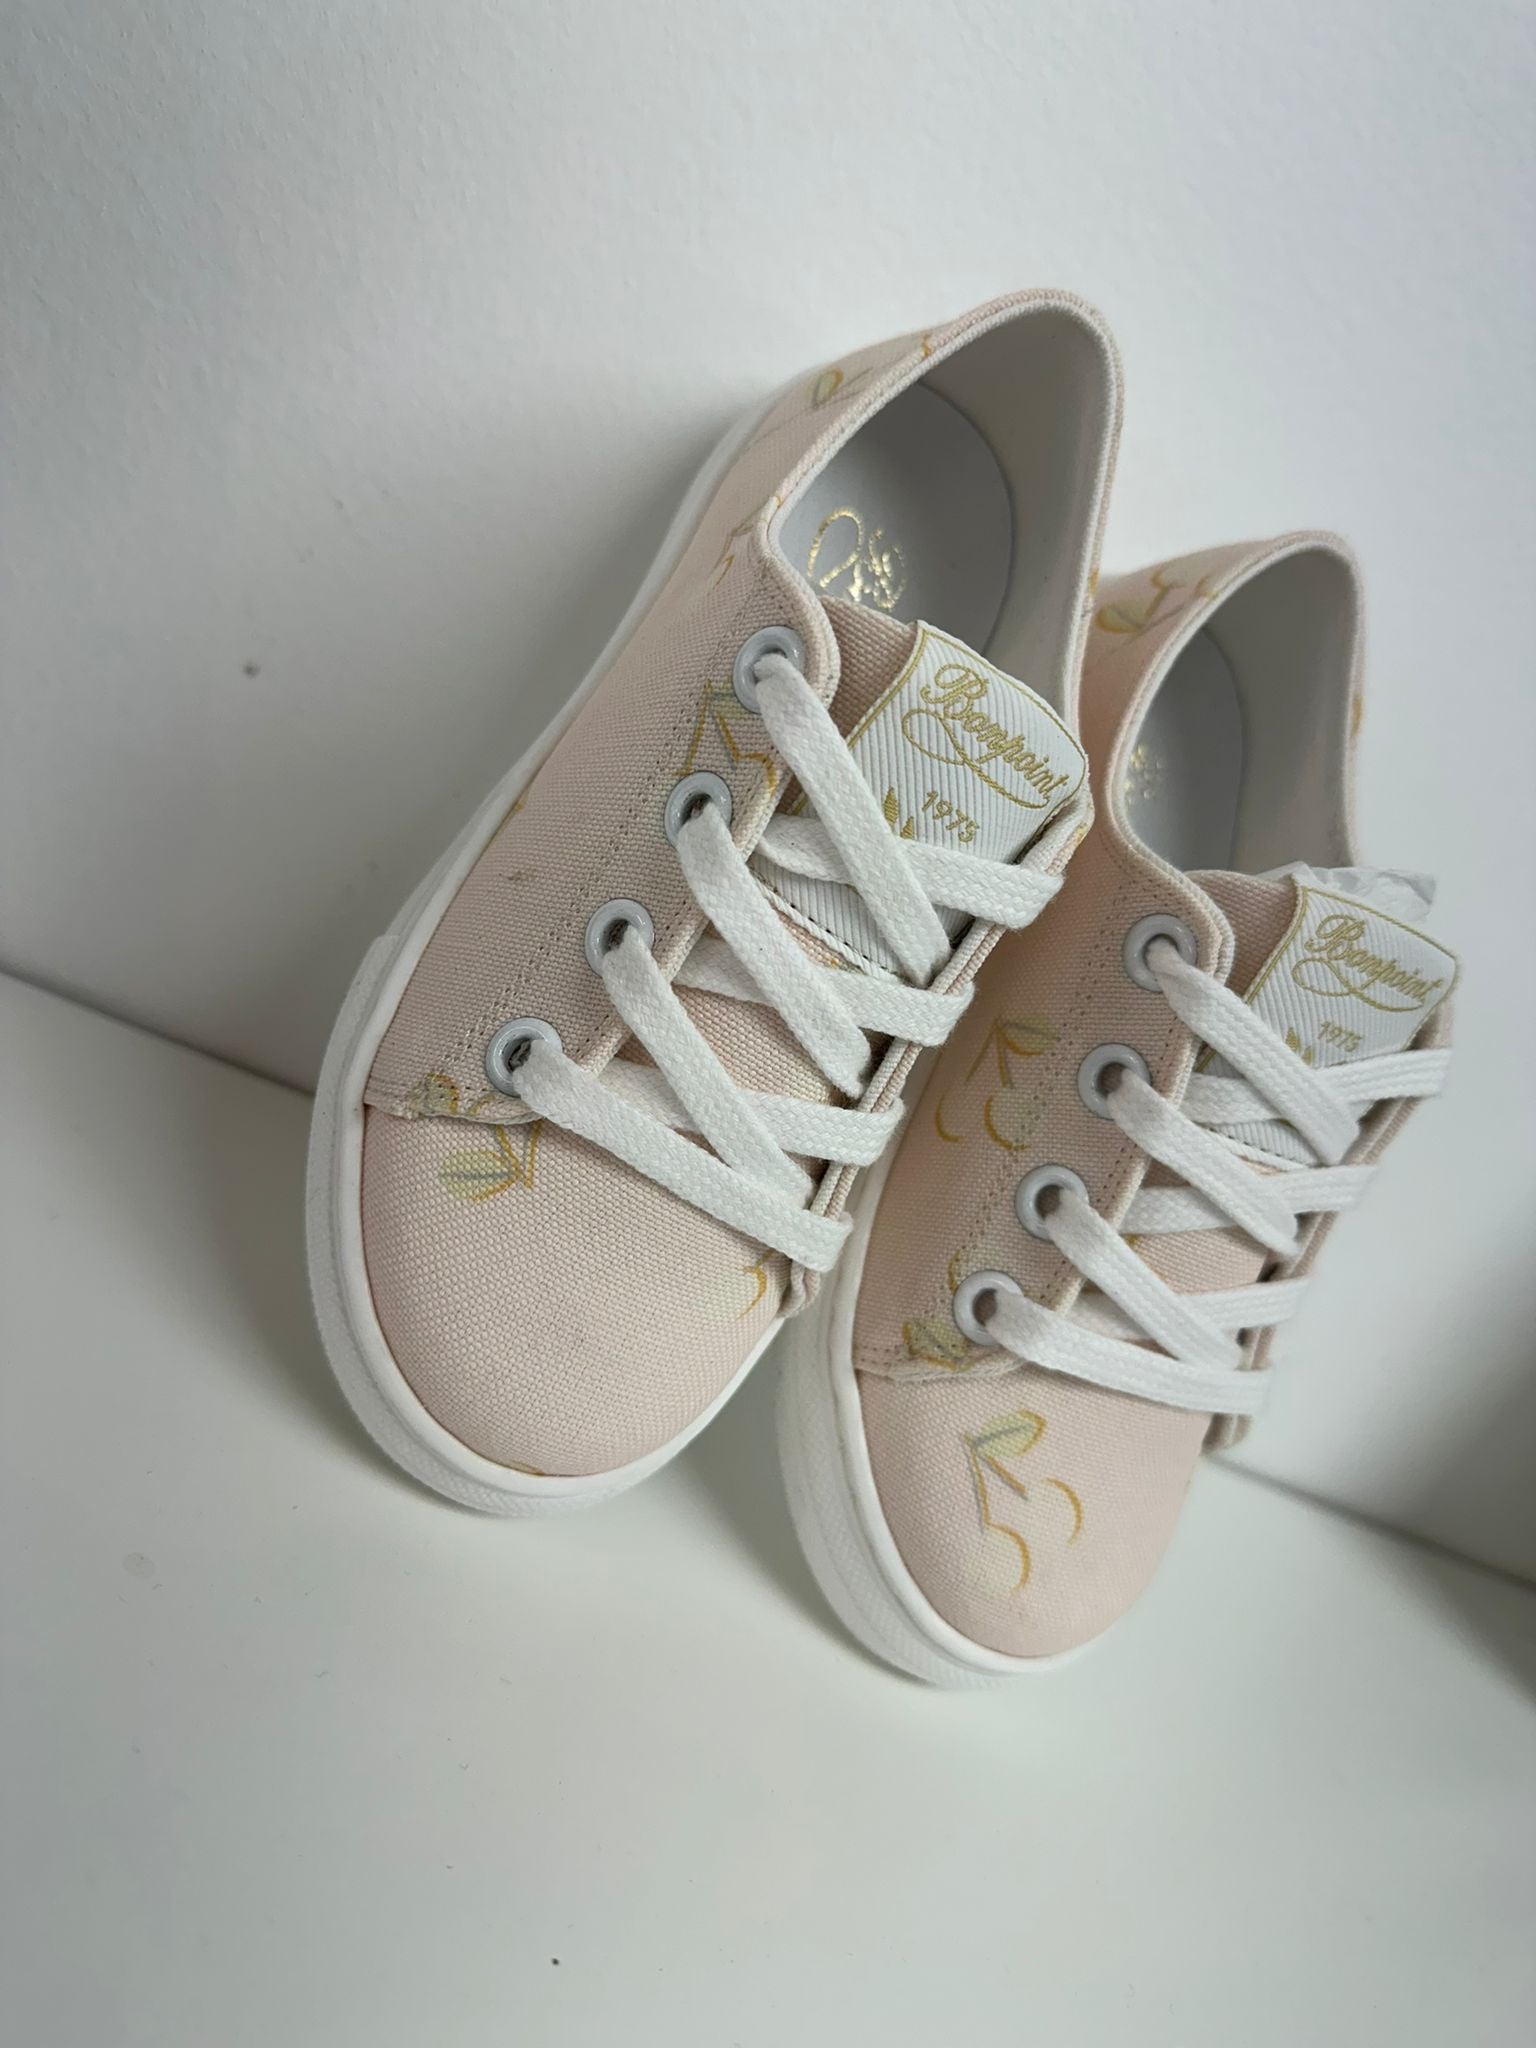 Bonpoint Cherry Lace Up Sneaker-Tassel Children Shoes